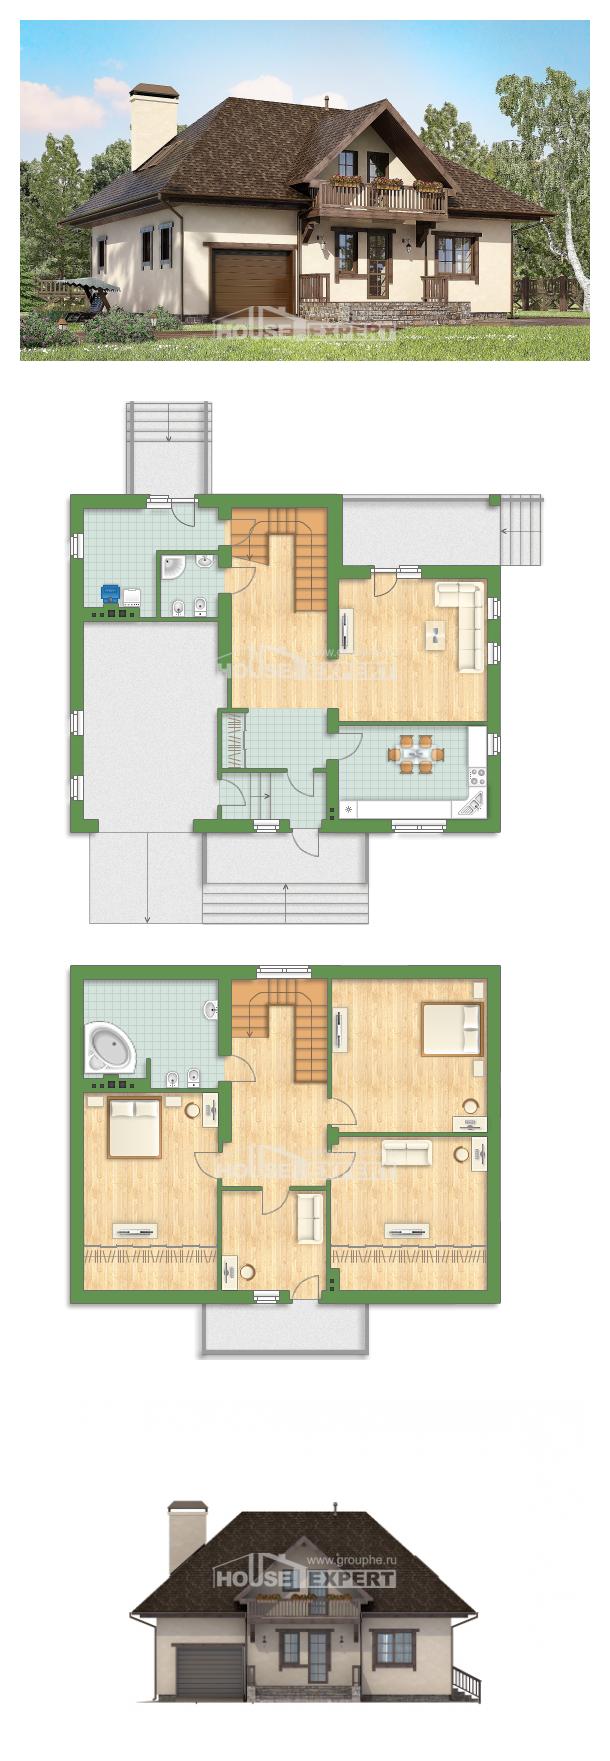 Проект дома 200-001-Л | House Expert